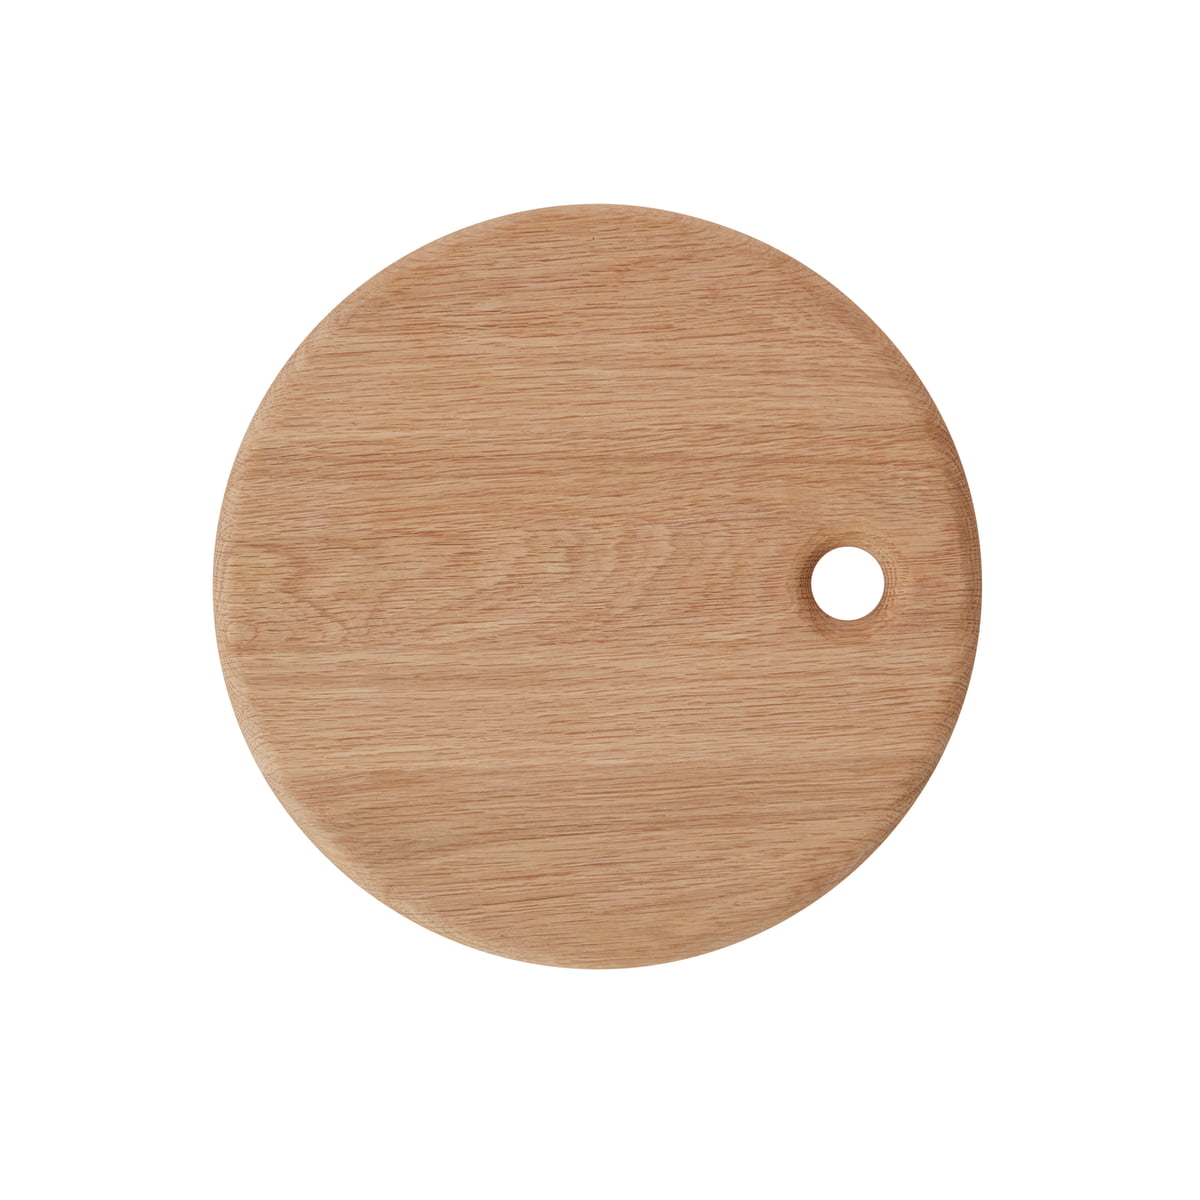 Oak Cutting Board With Tray Small 12x16 – YOHO